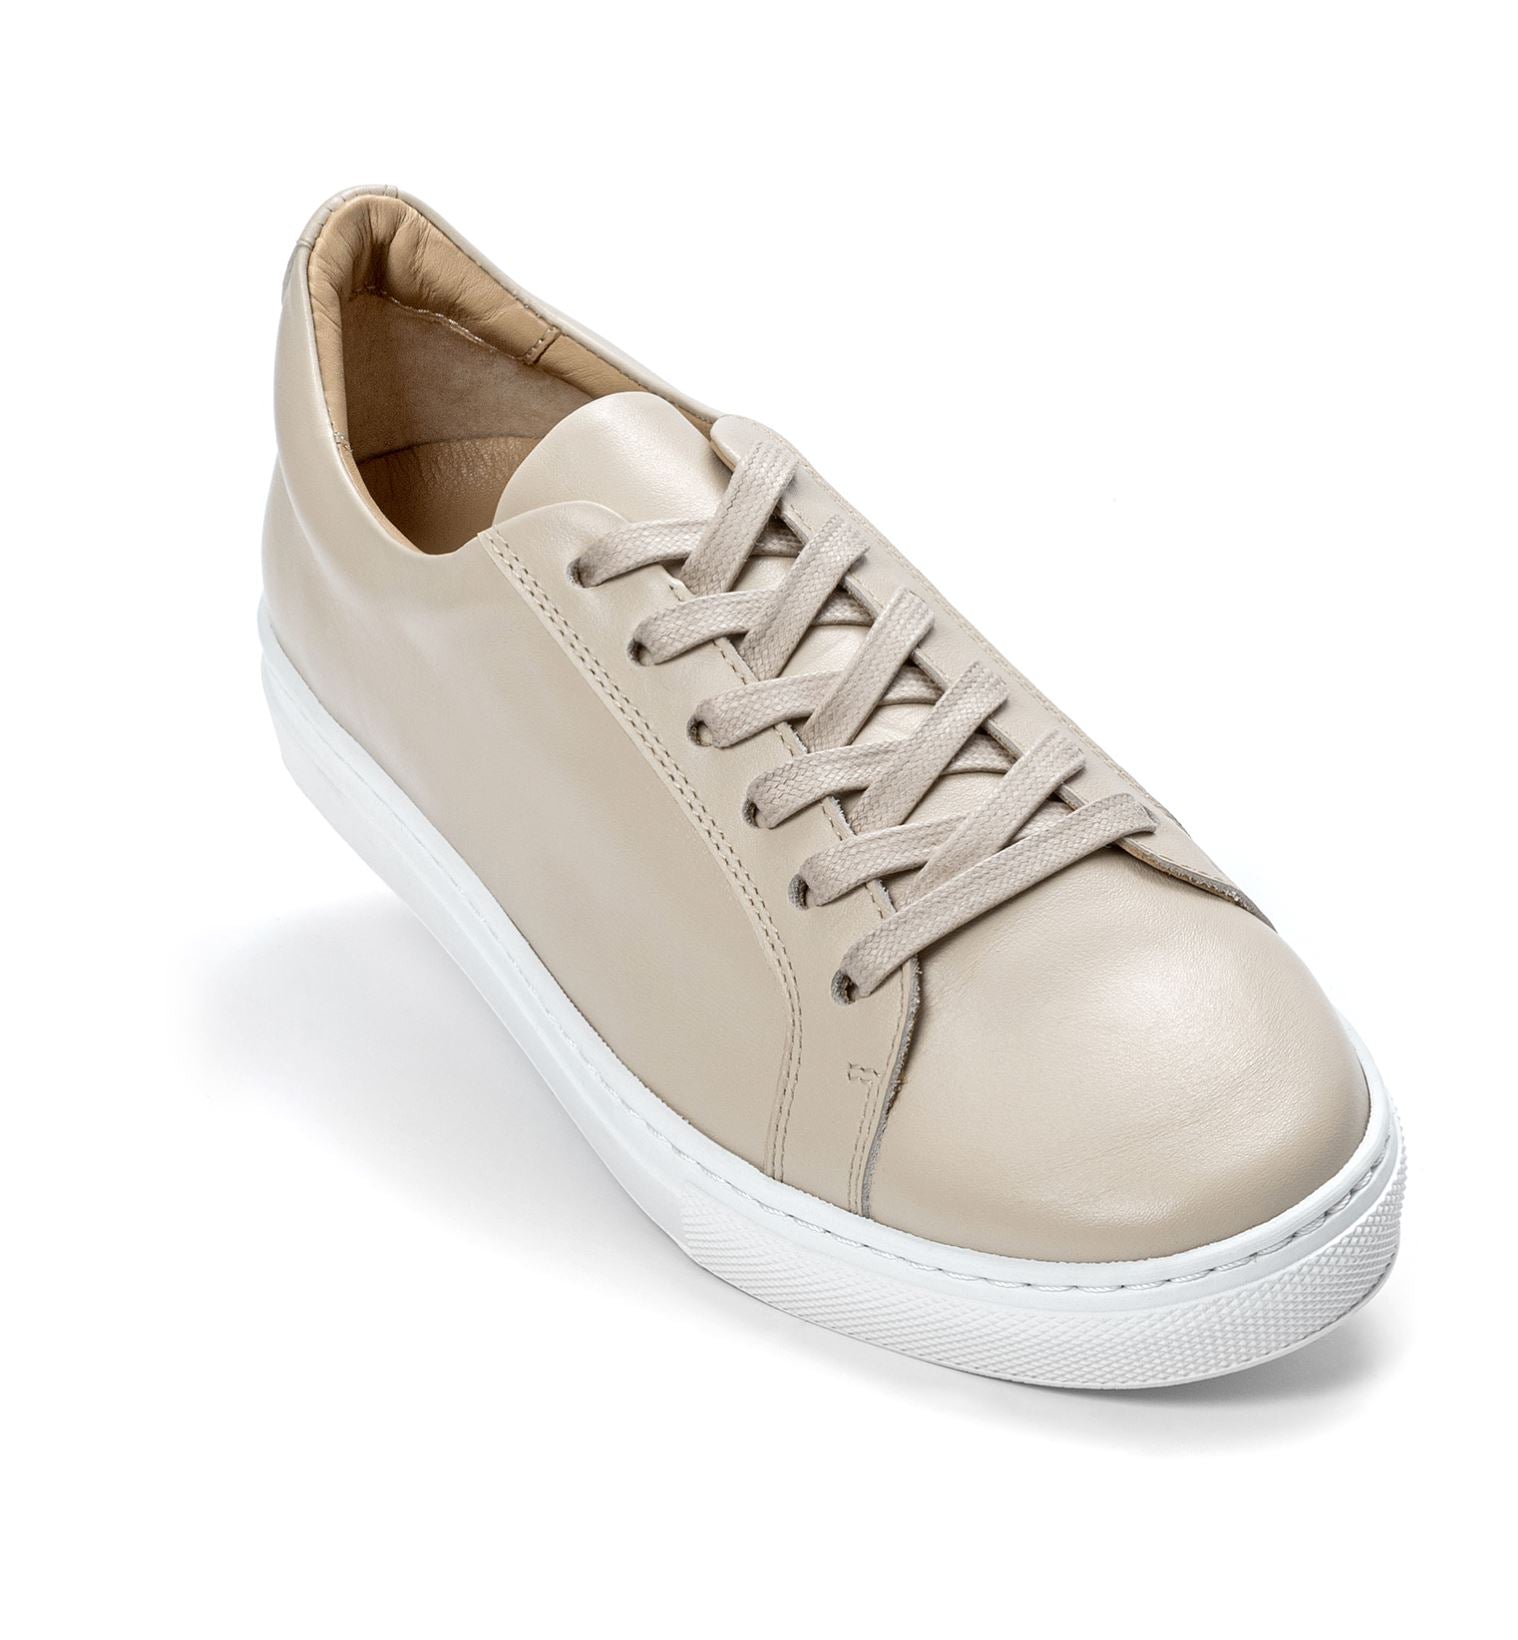 Sneaker klassisch - Elfenbein Schuhe Atelier Treger 